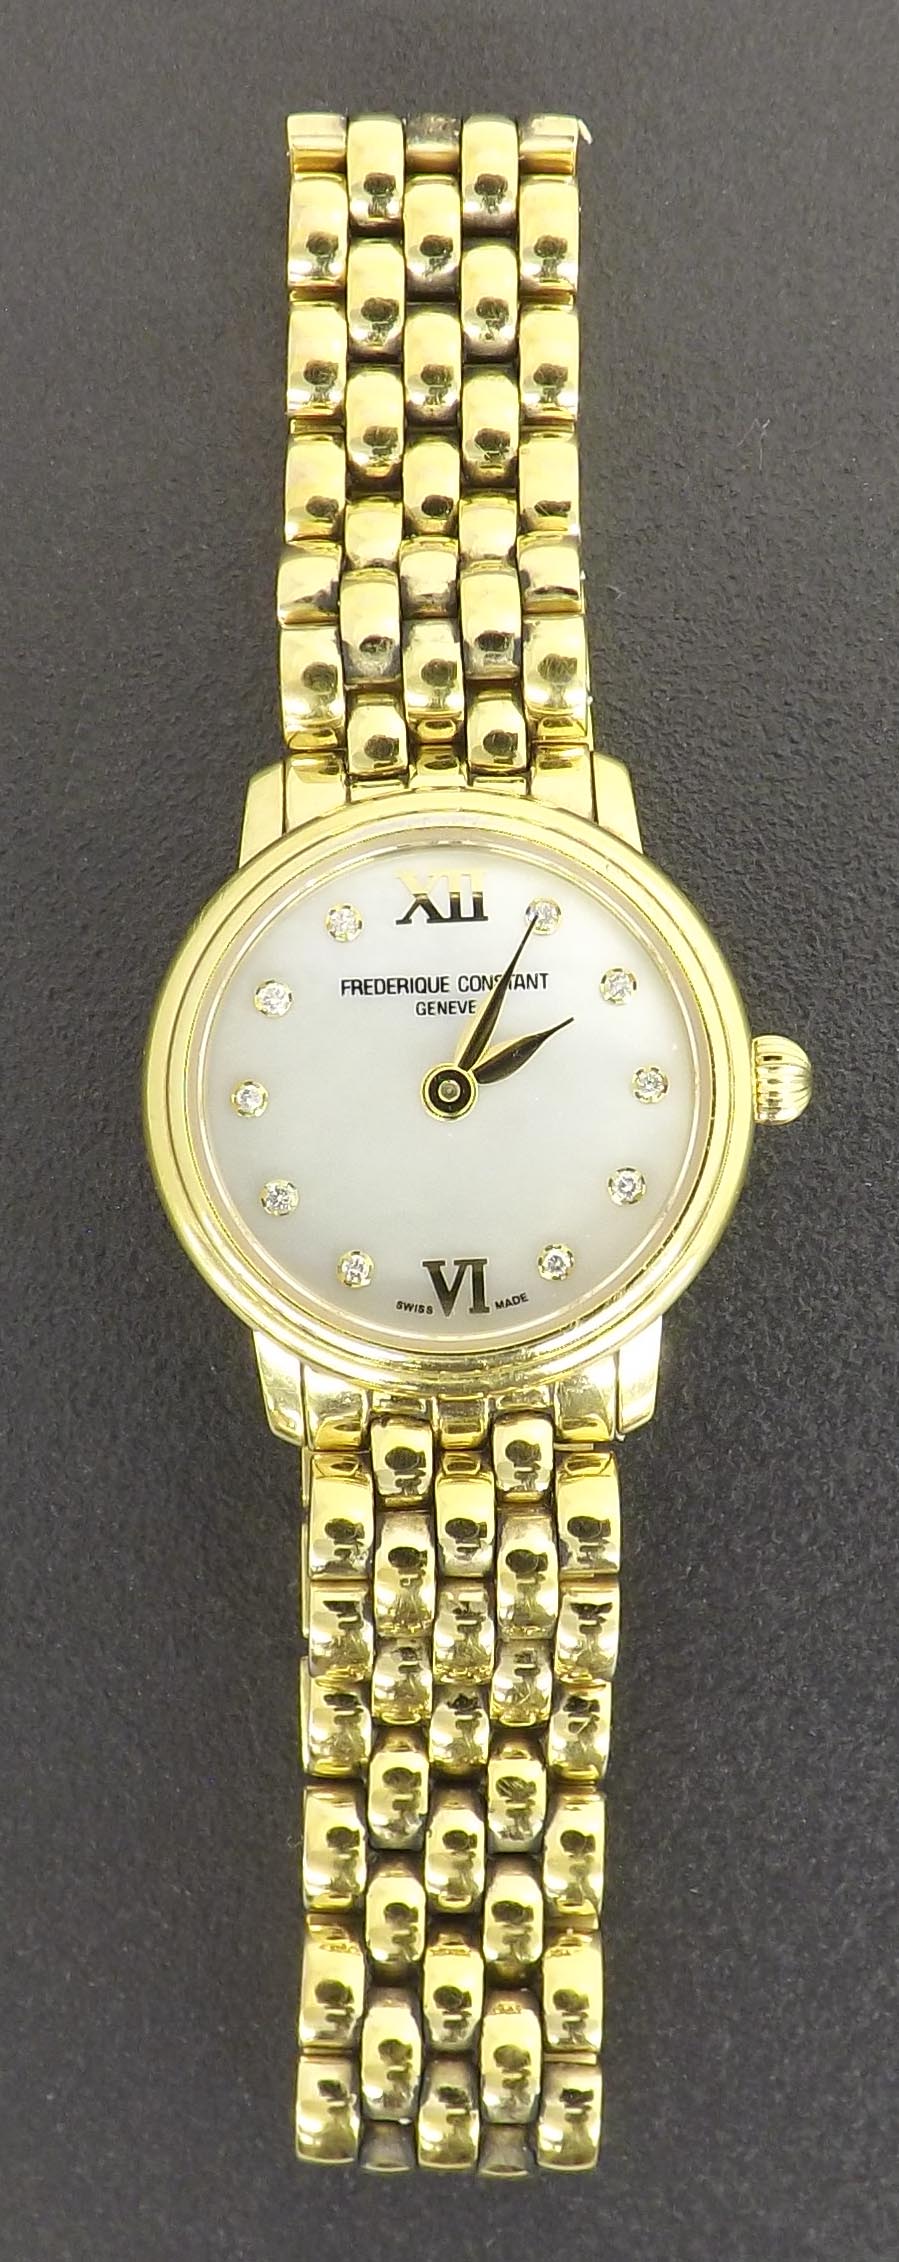 Frederique Constant Geneve Classic gold plated diamond set lady's bracelet watch, ref. FC 200/ - Image 2 of 3